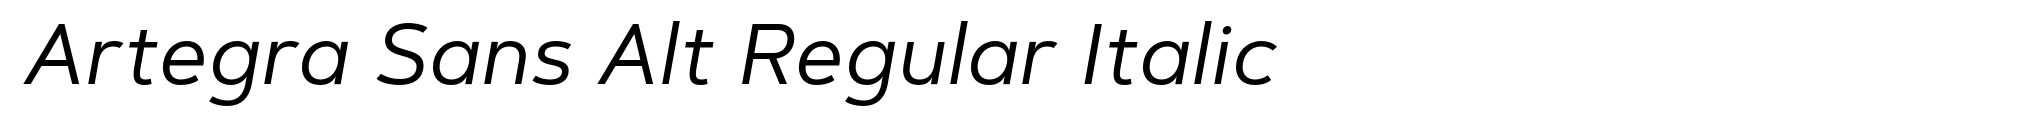 Artegra Sans Alt Regular Italic image